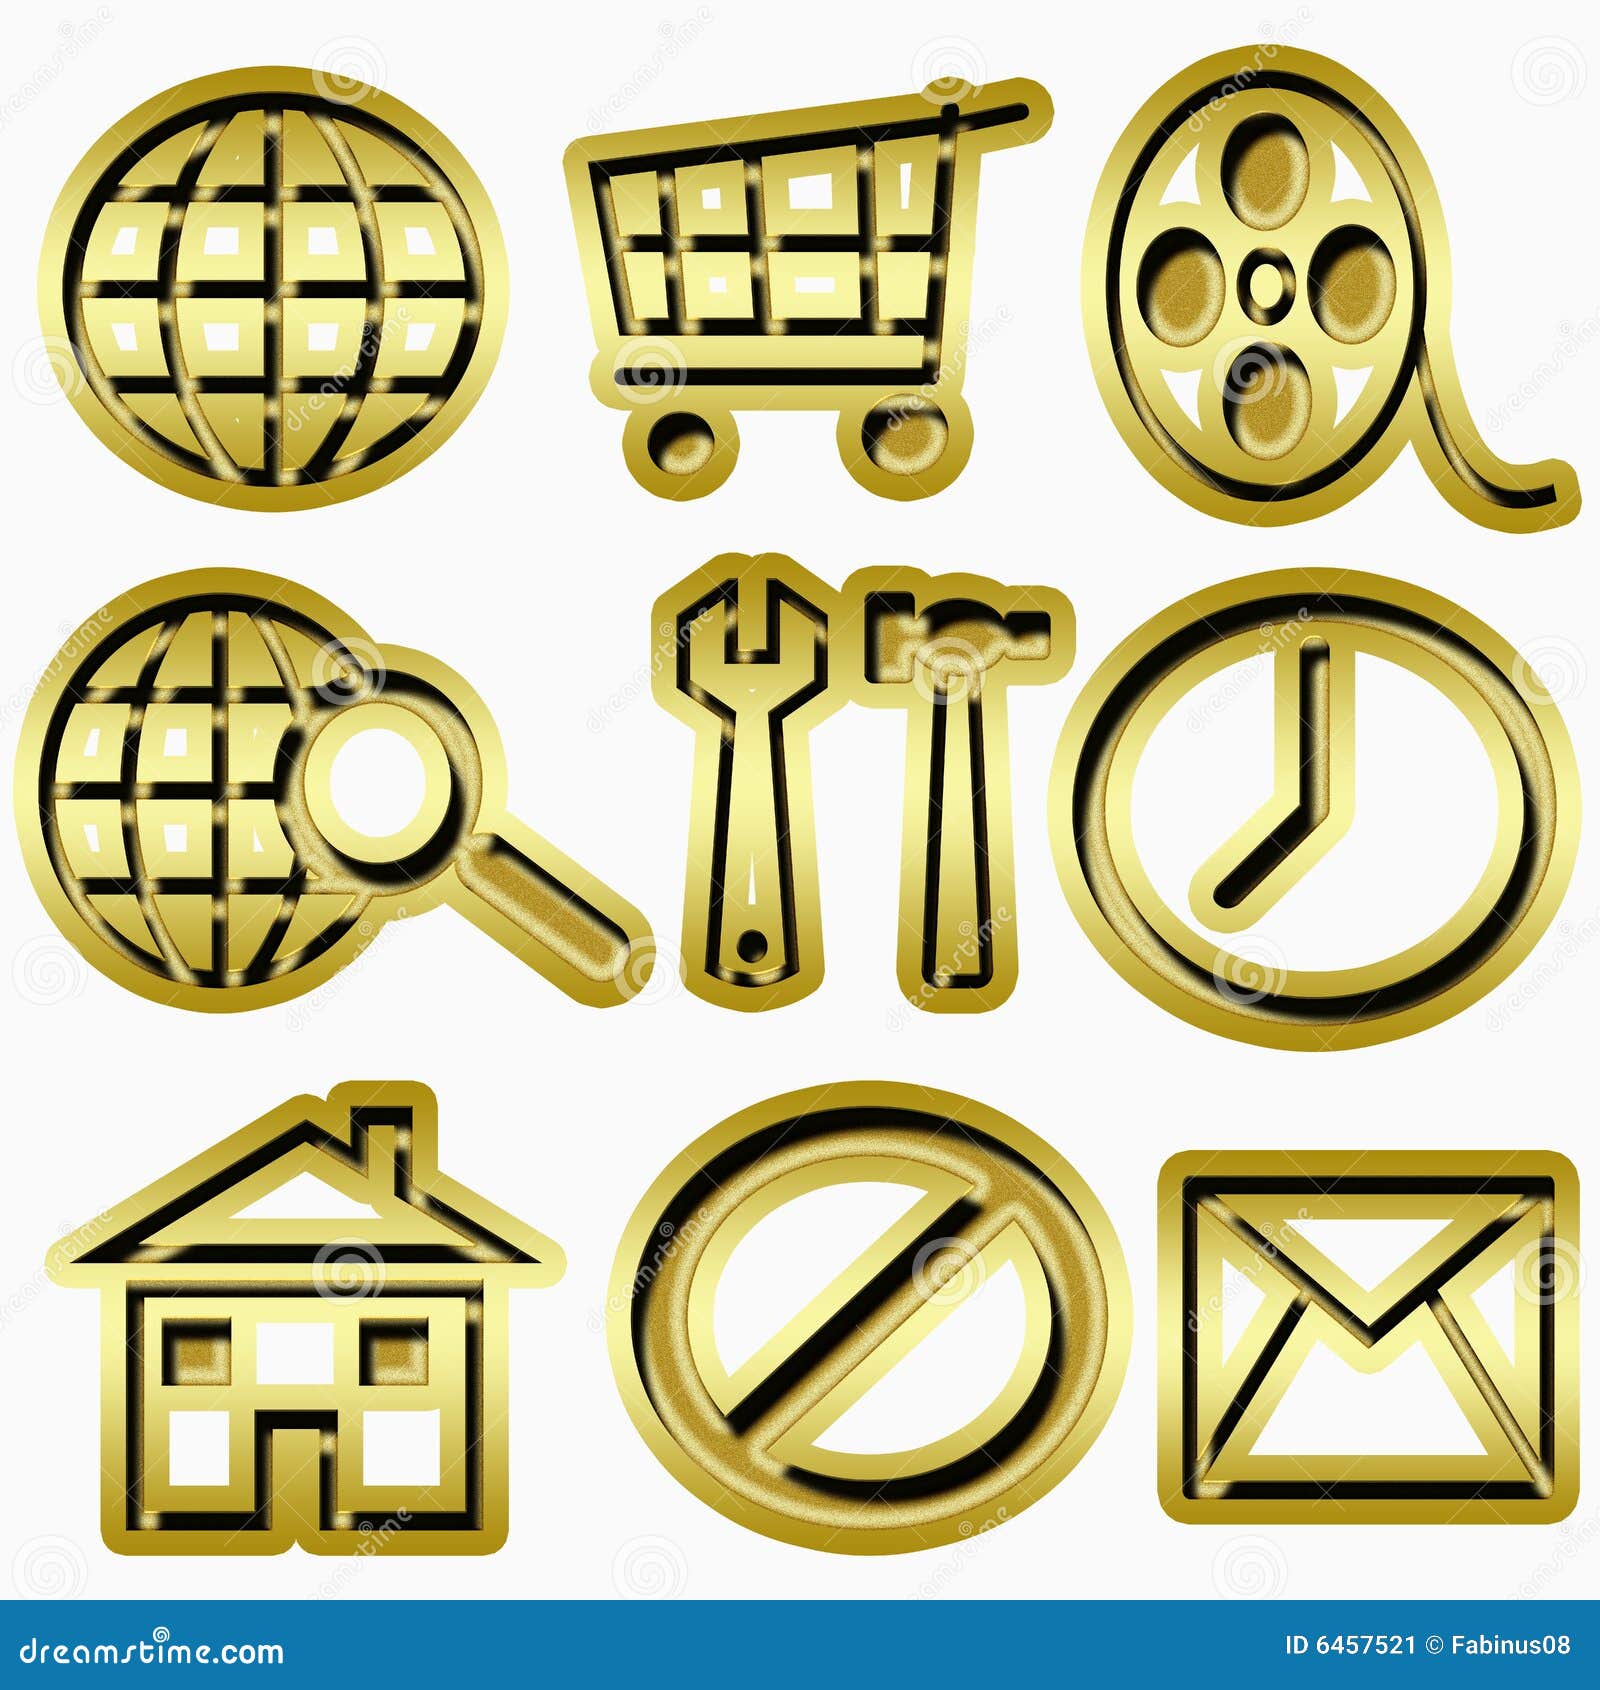 Gold web icons stock illustration. Illustration of icons ...